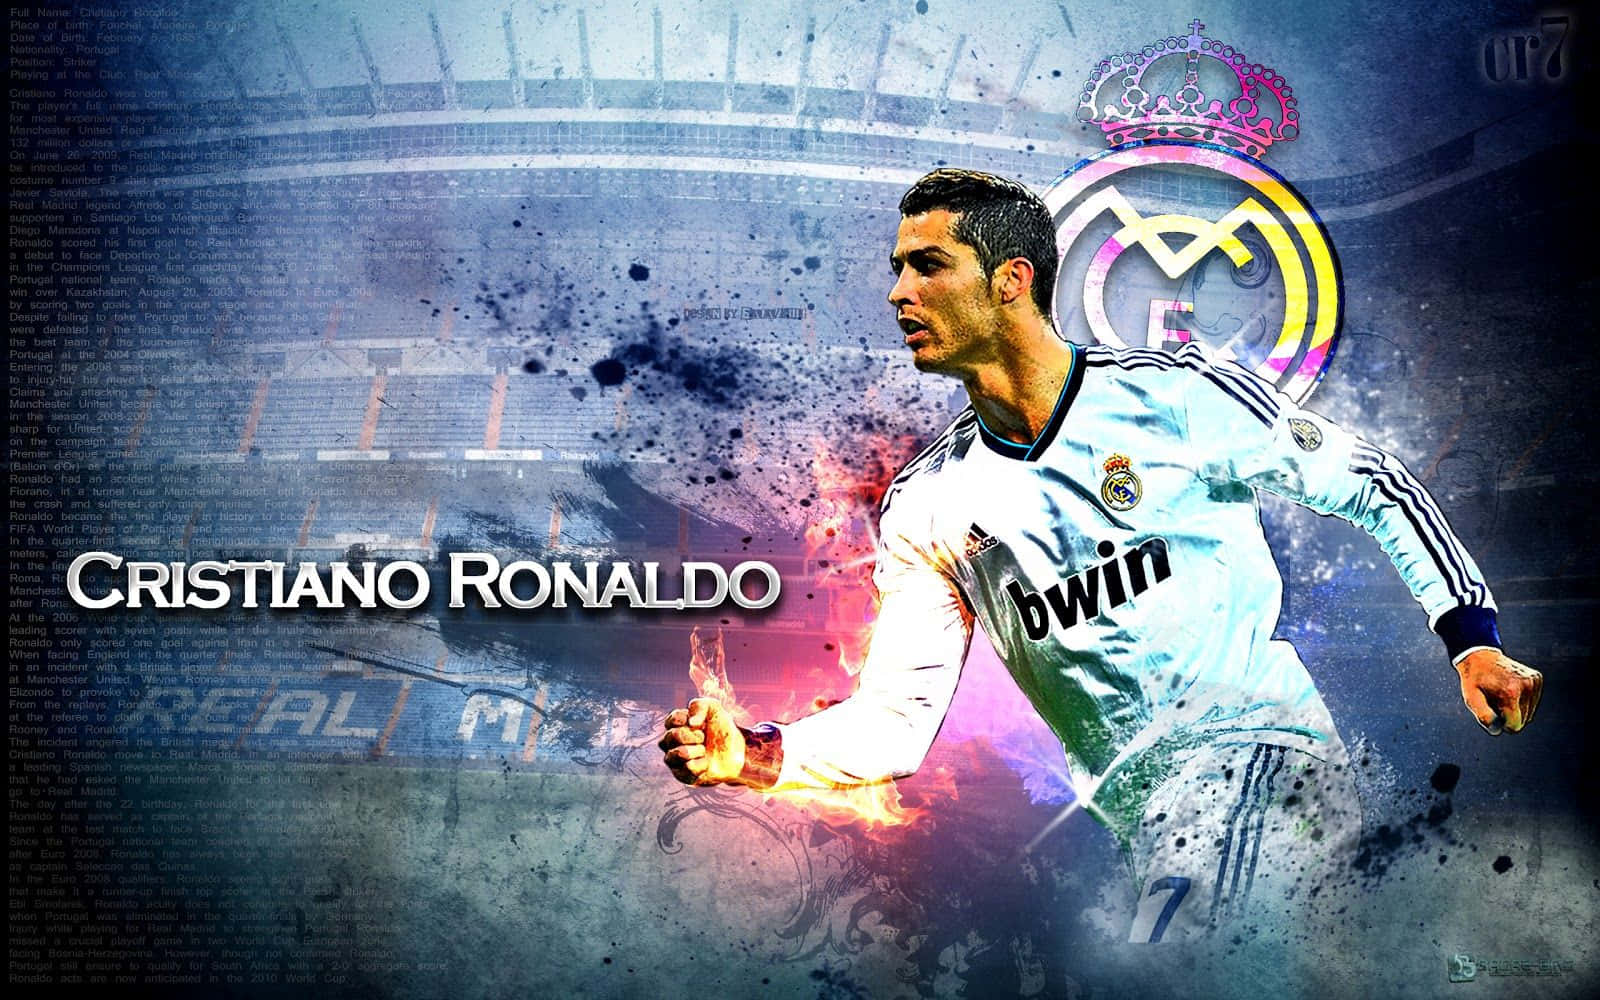 Cristiano Ronaldo scorer et mål med dygtig fodarbejde. Wallpaper